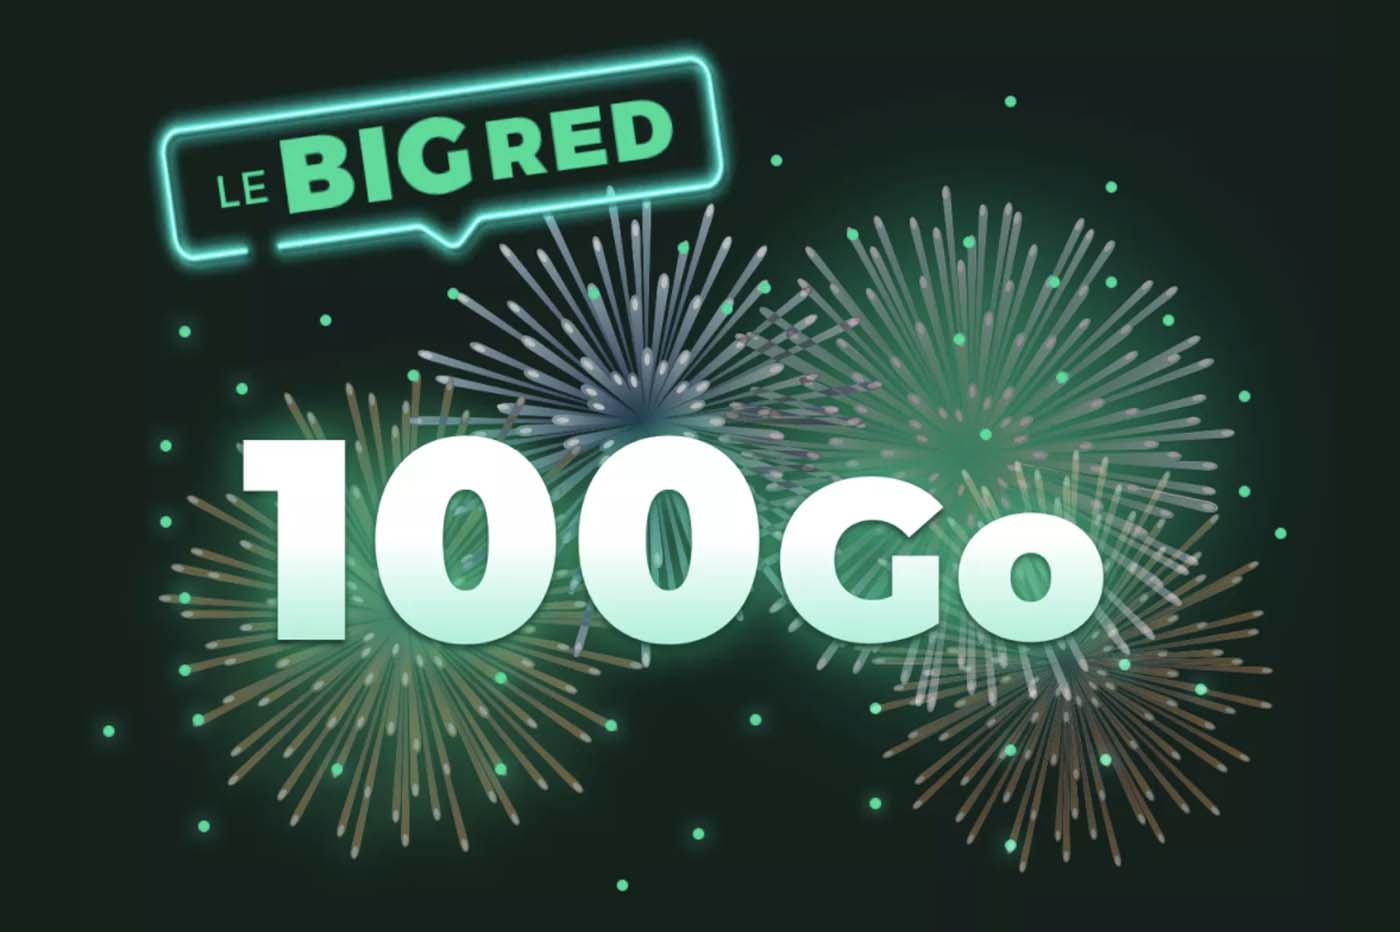 Big RED 100 Go